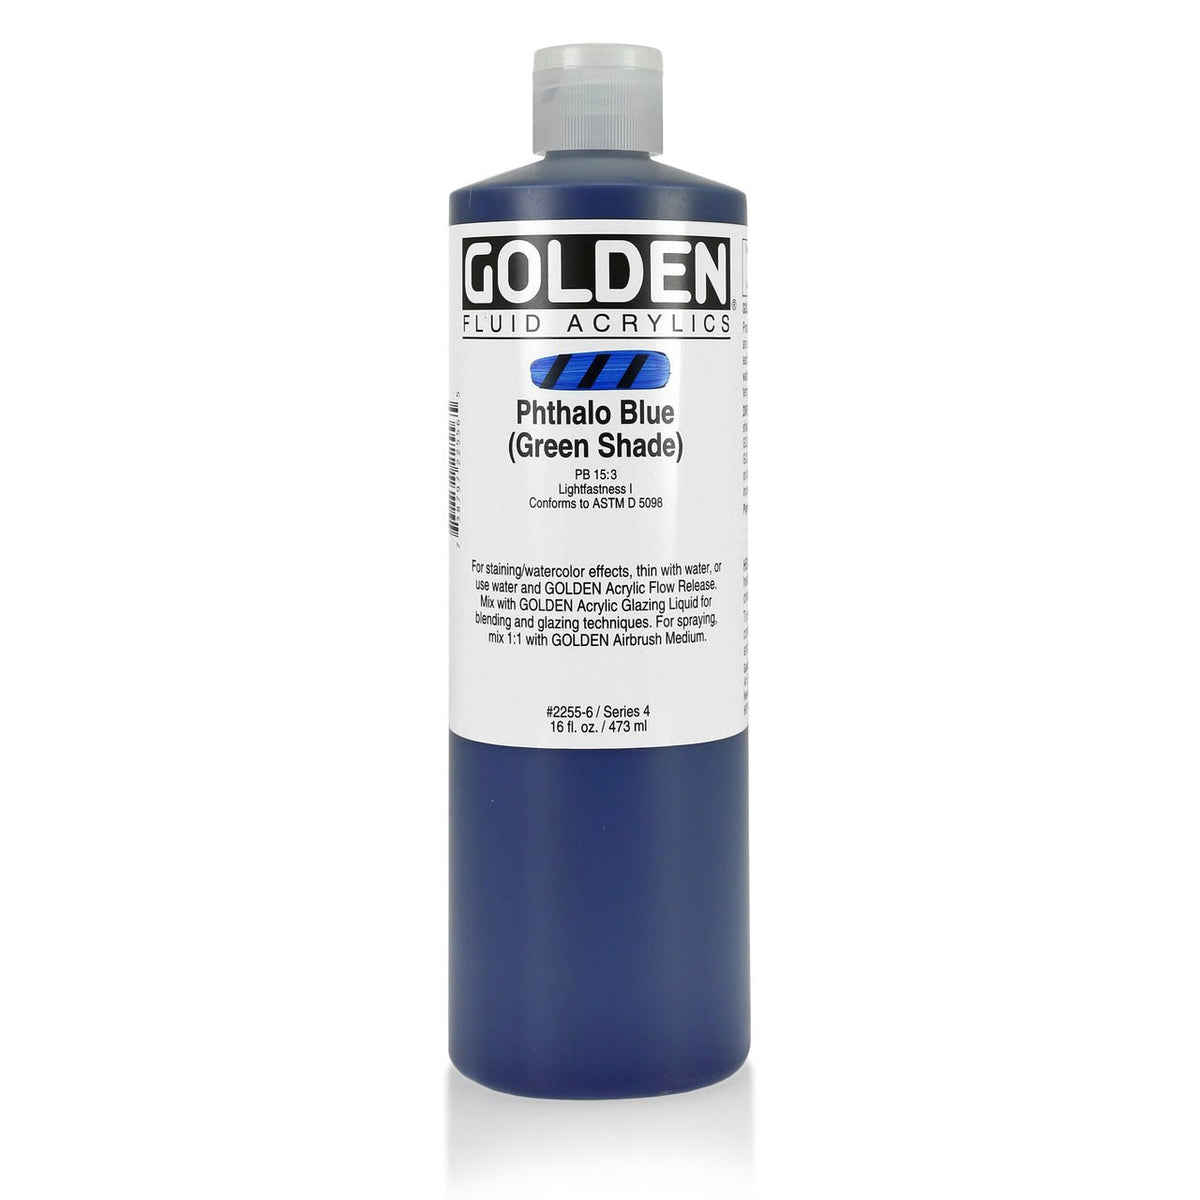 Golden Fluid Acrylic Phthalo Blue (green shade) 16 oz - merriartist.com